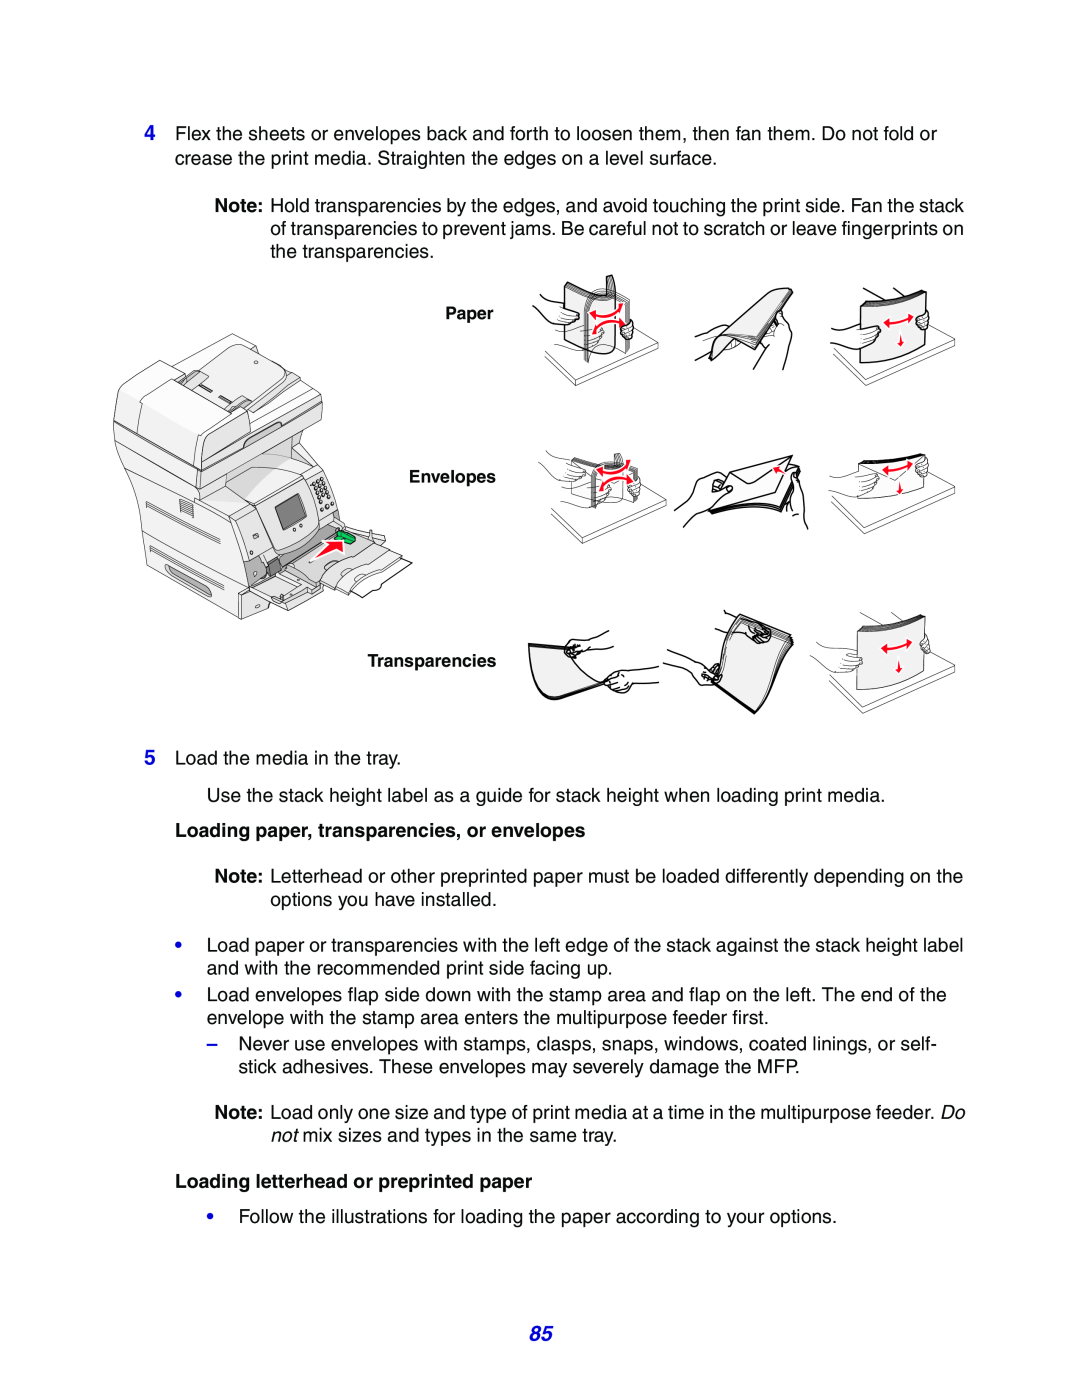 Lexmark X642e manual Loading paper, transparencies, or envelopes, Loading letterhead or preprinted paper 